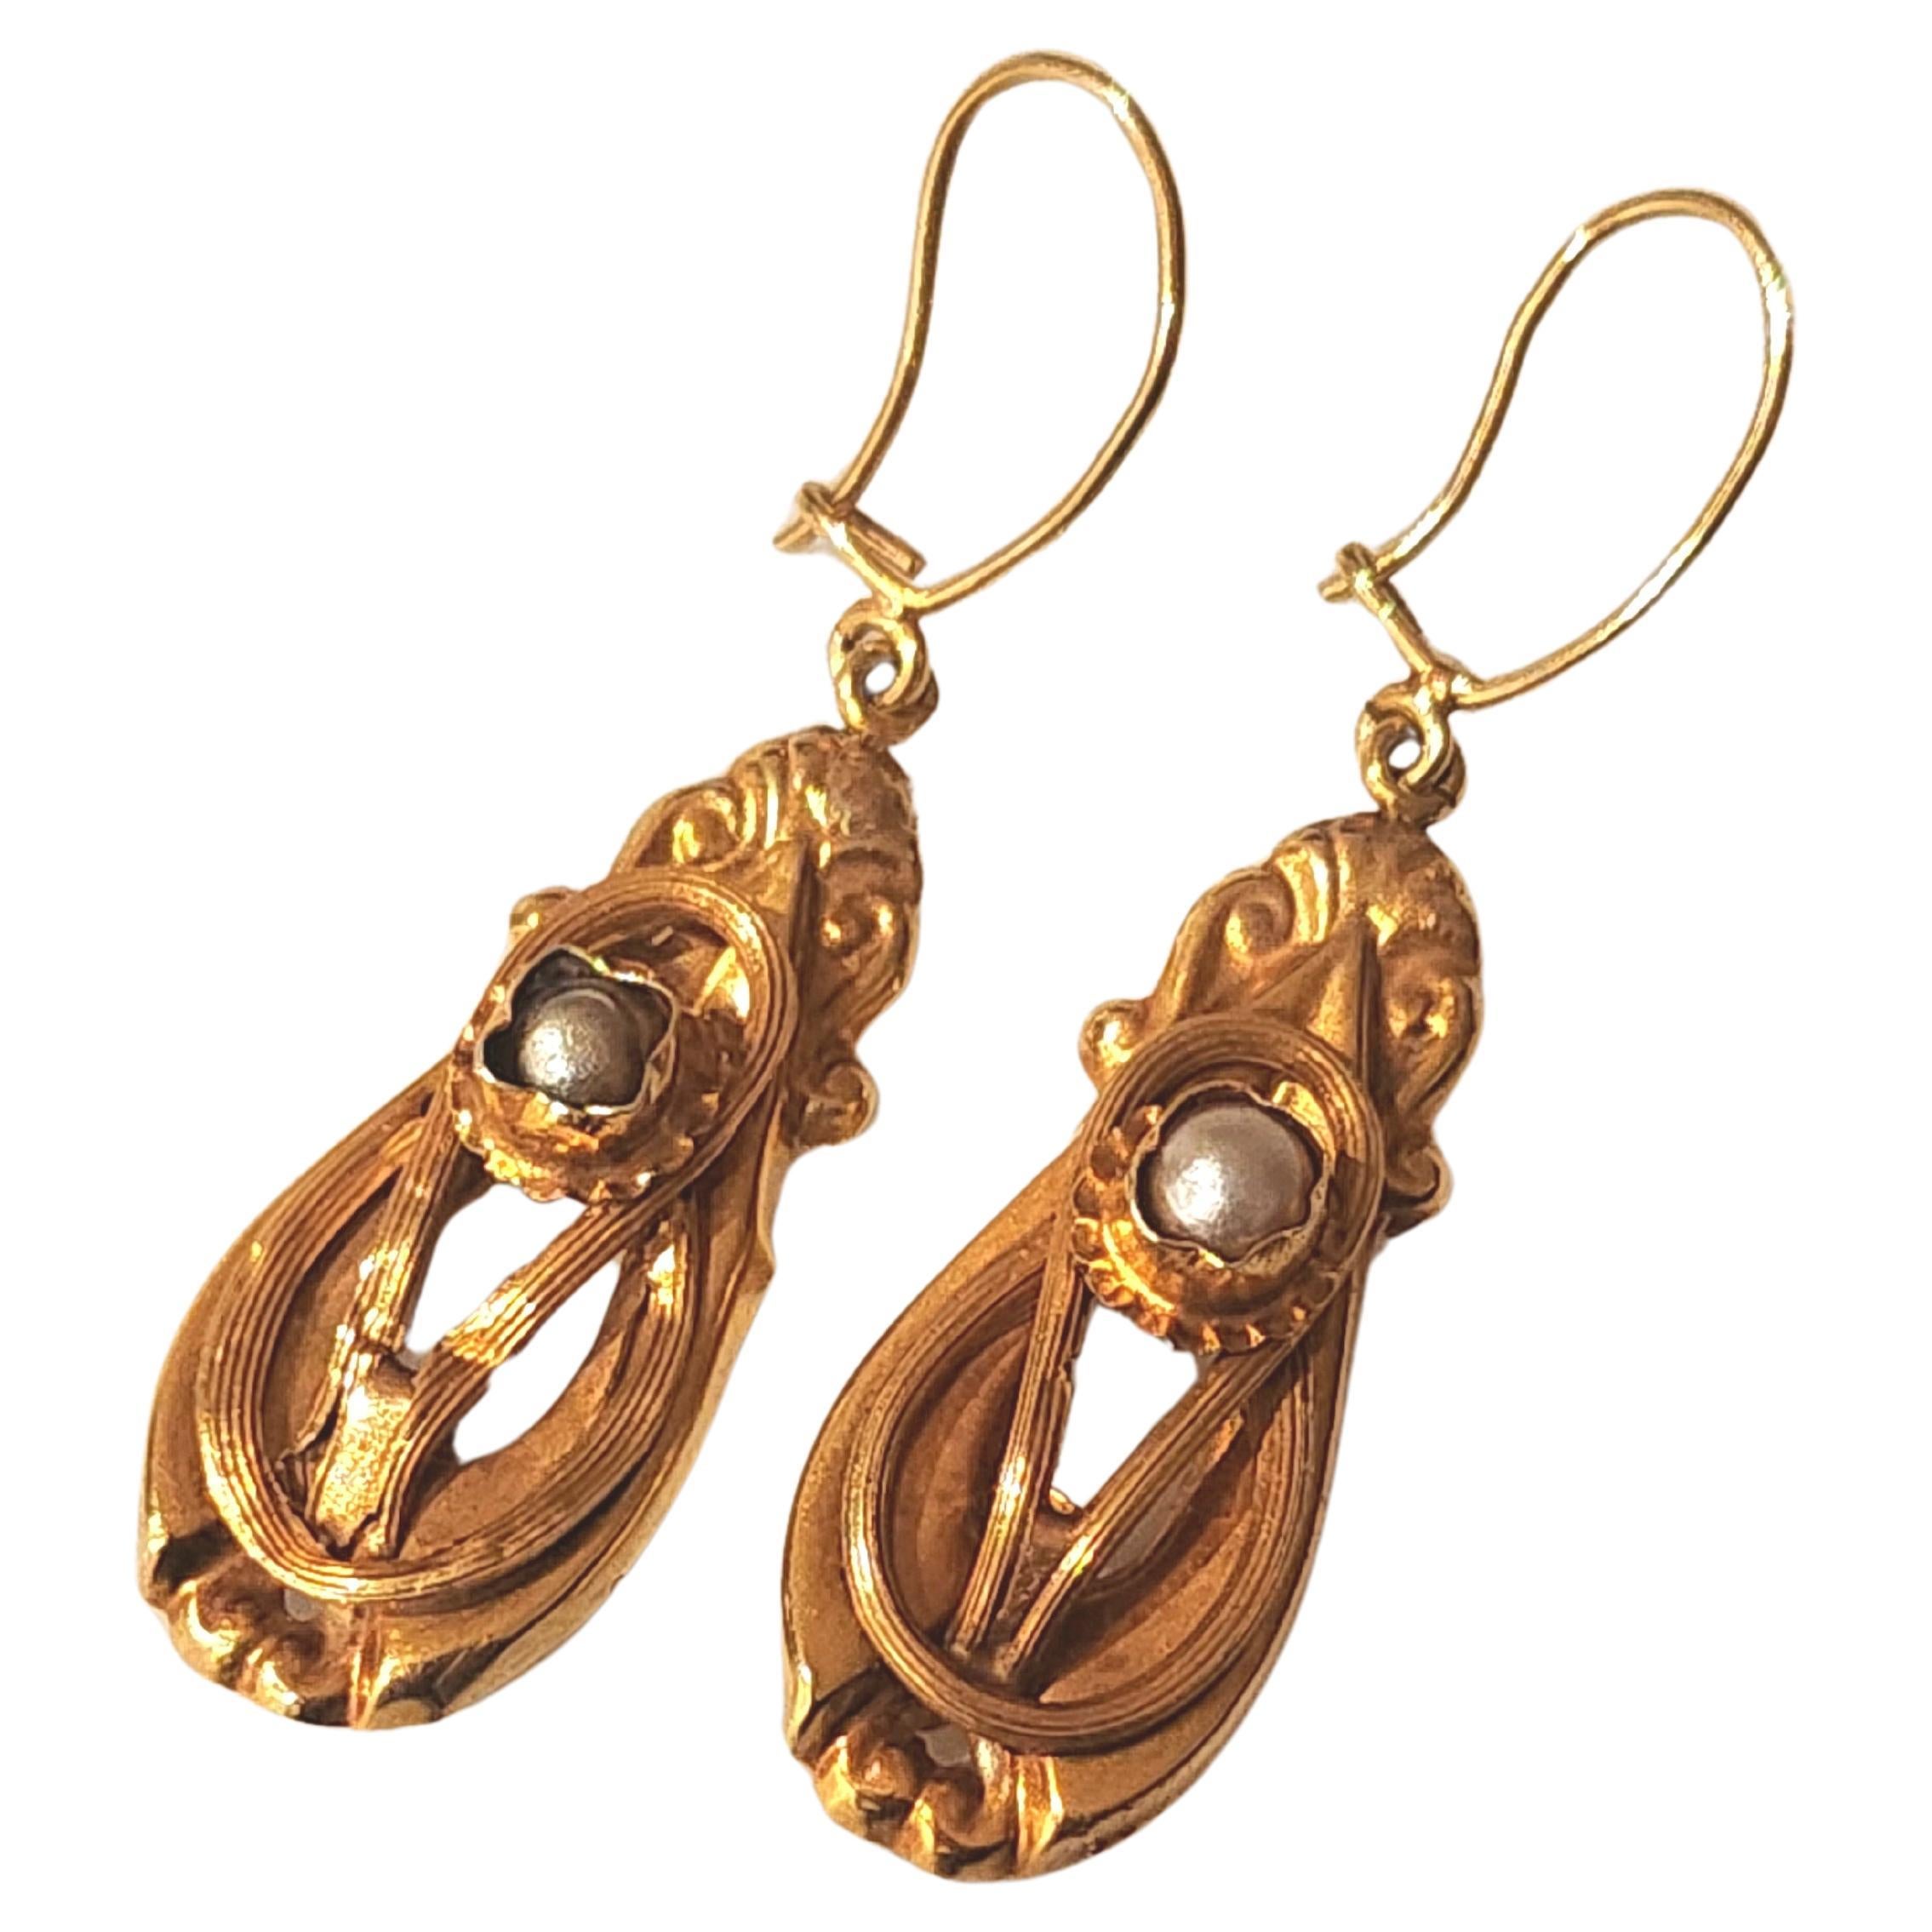 Antique 1800s Biedermeier Gold Earrings In Good Condition For Sale In Cairo, EG